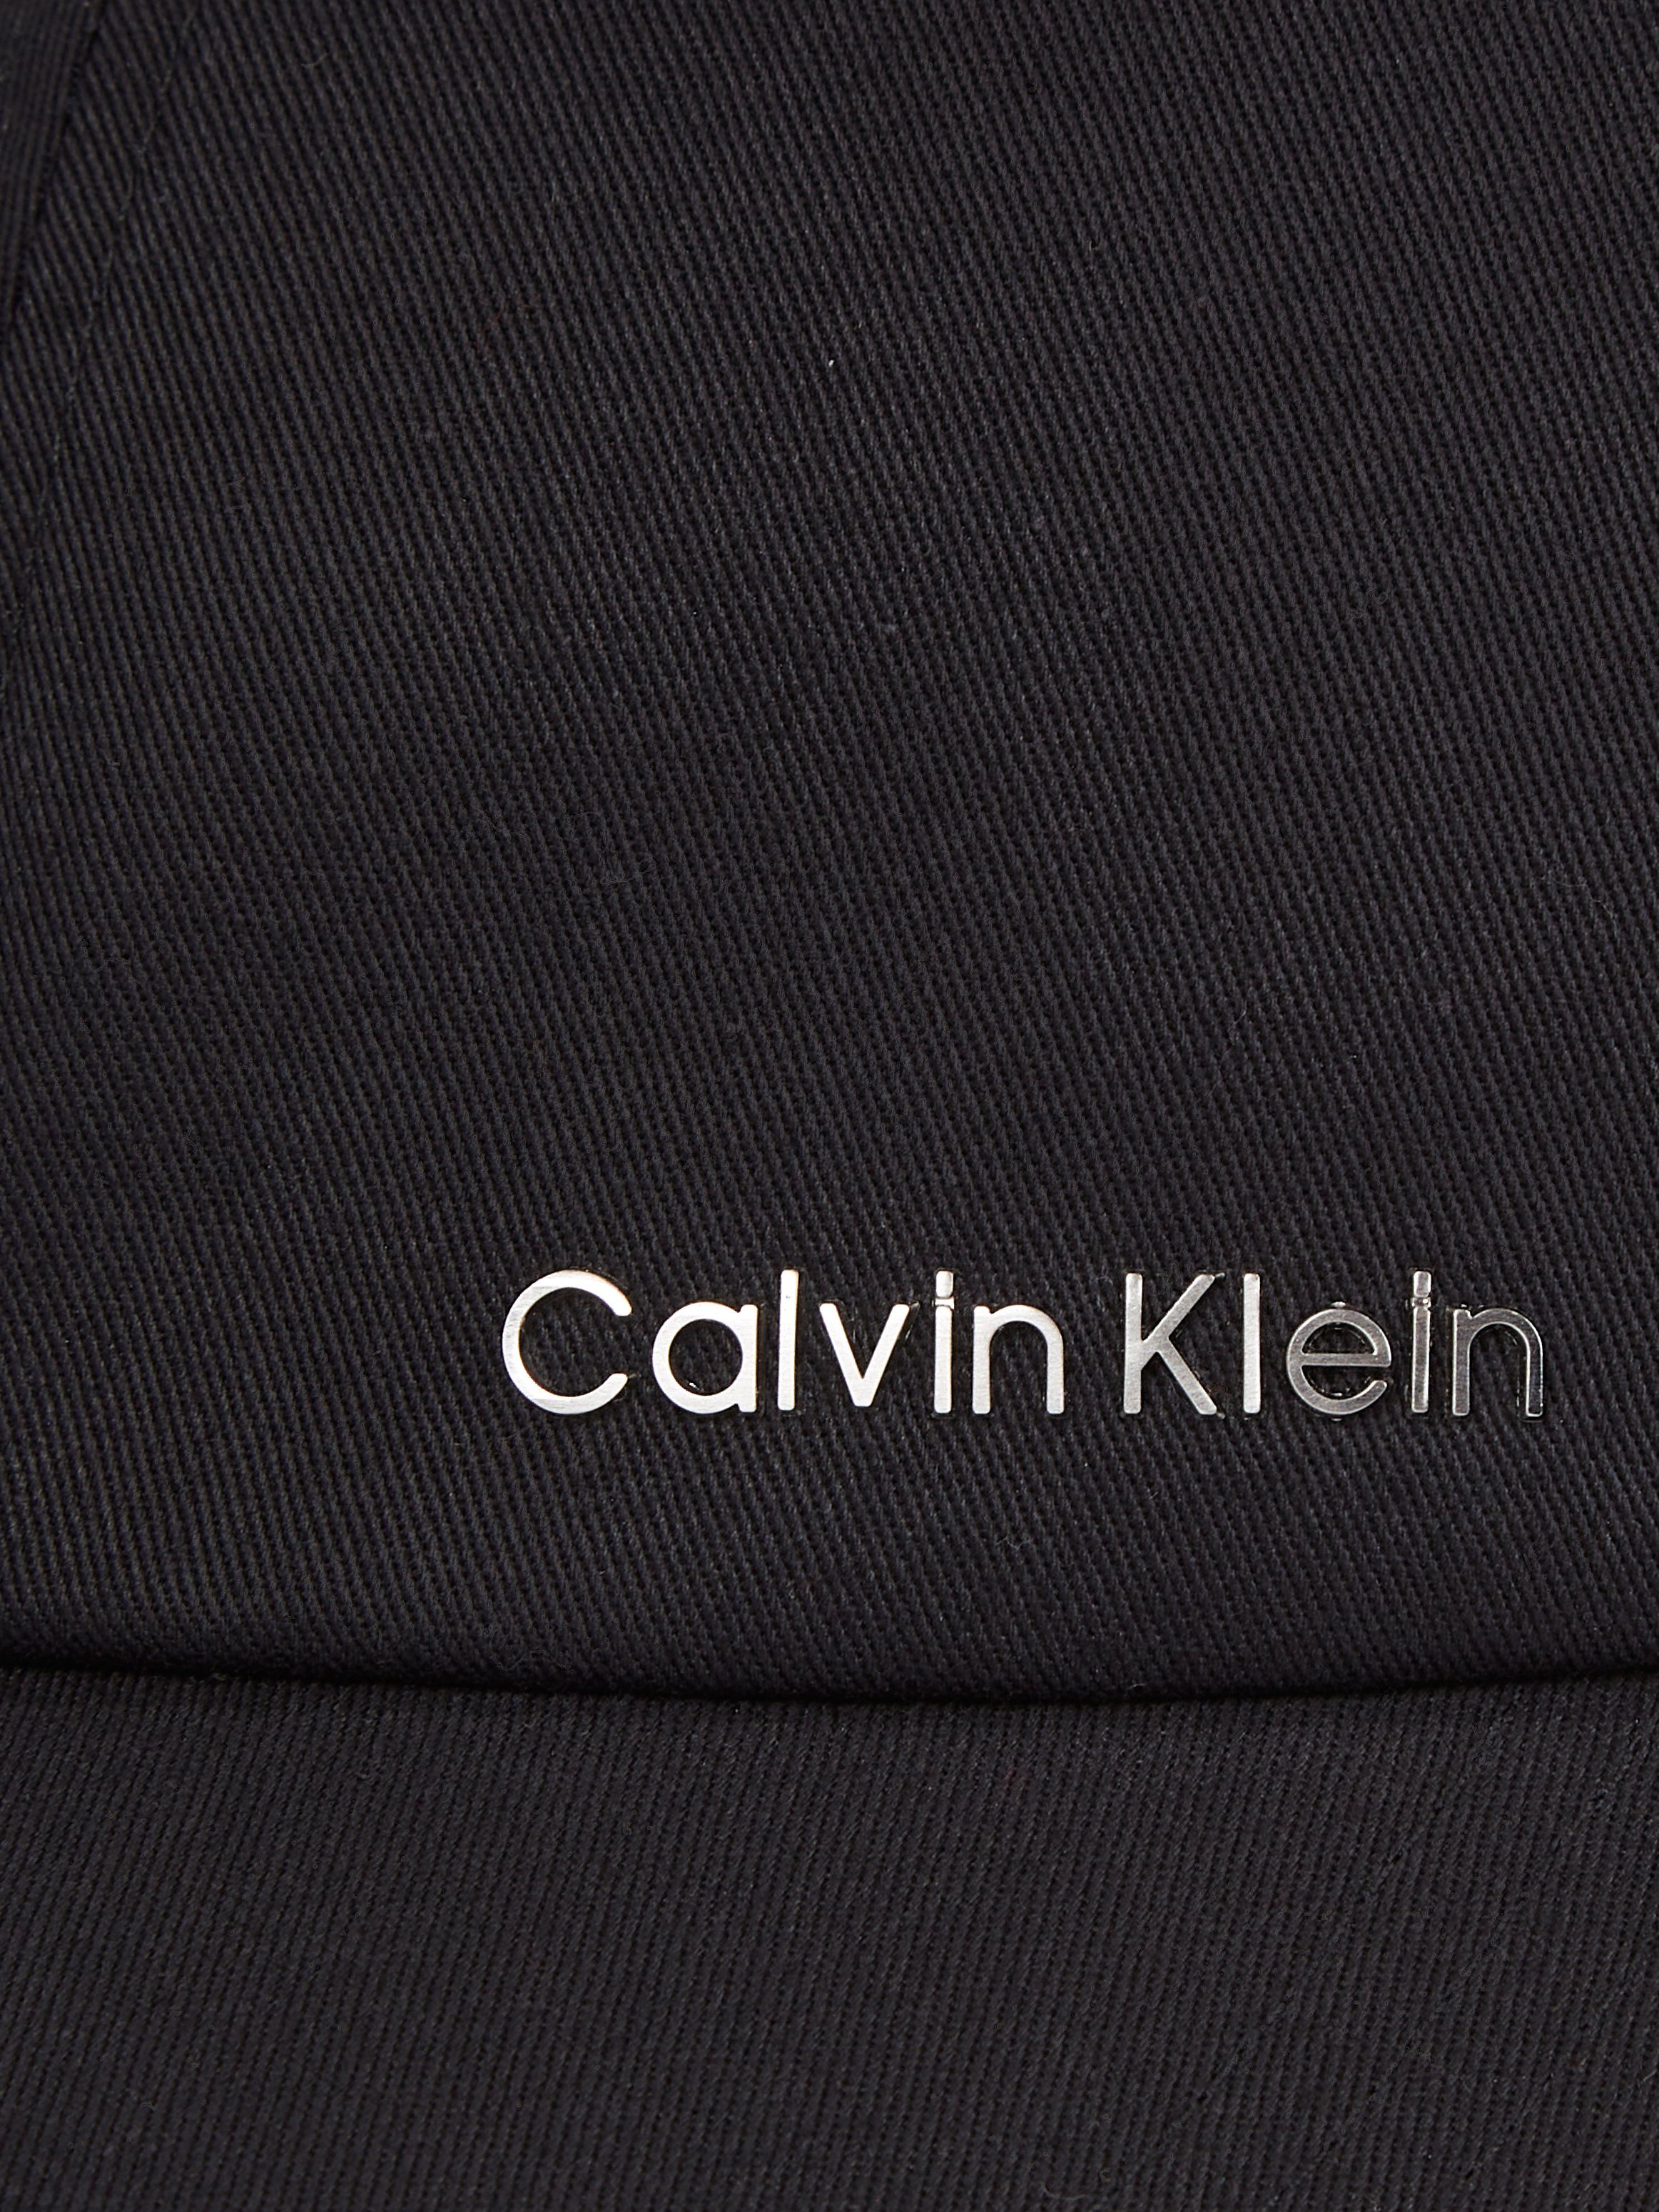 CAP Ck Baseball BB Cap Black Klein LETTERING Calvin METAL